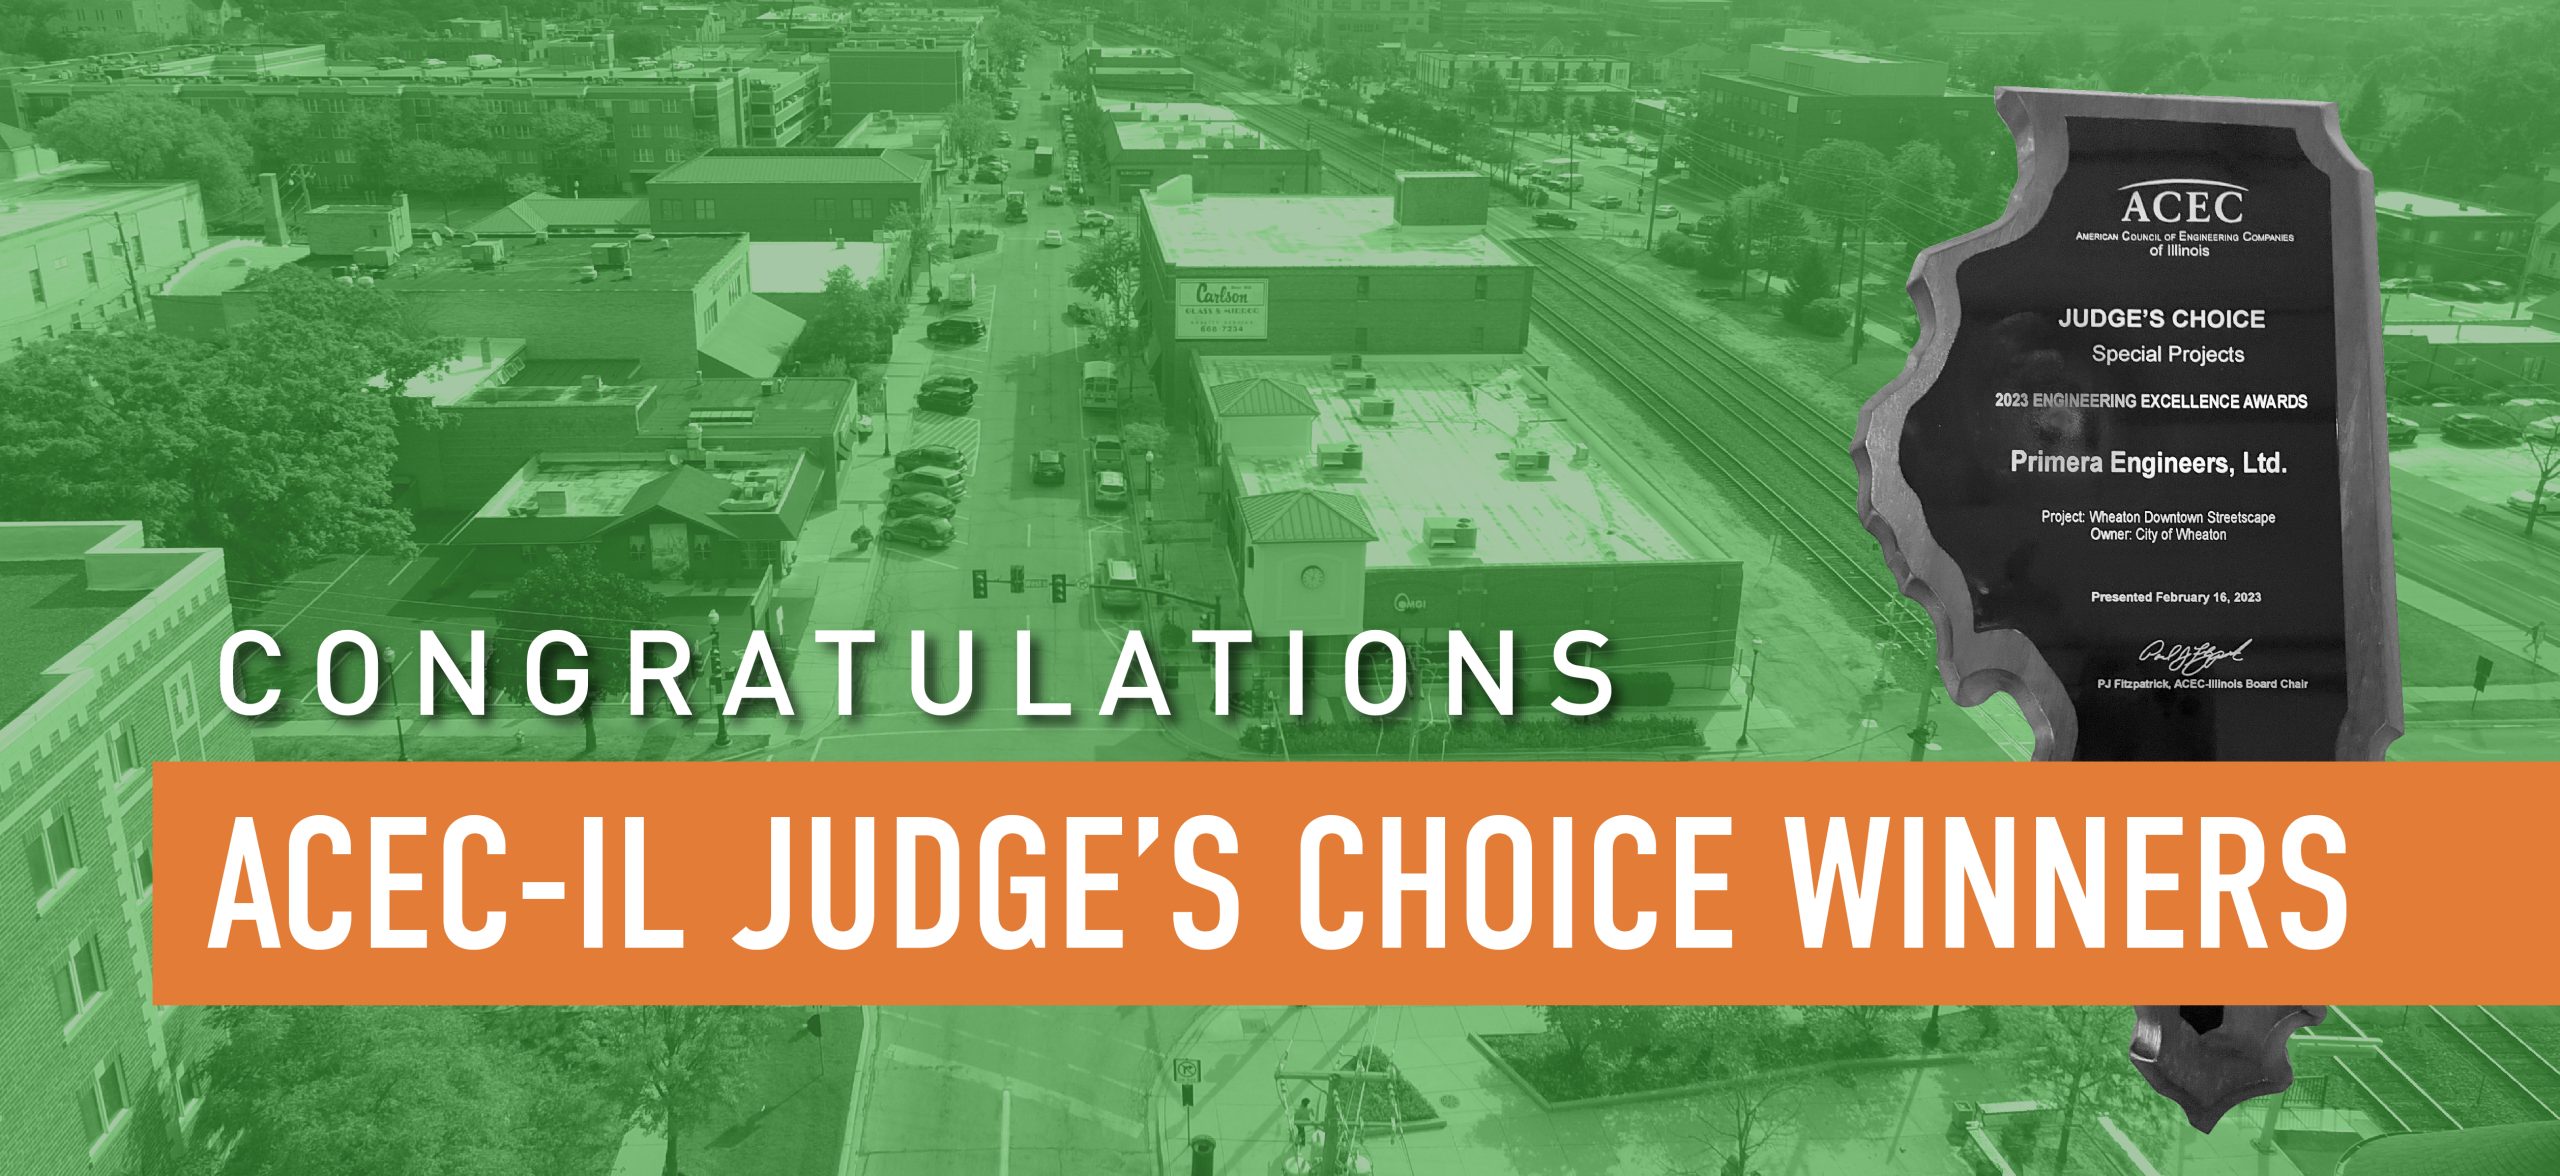 Wheaton Downtown Streetscape Project Wins Judge’s Choice Award